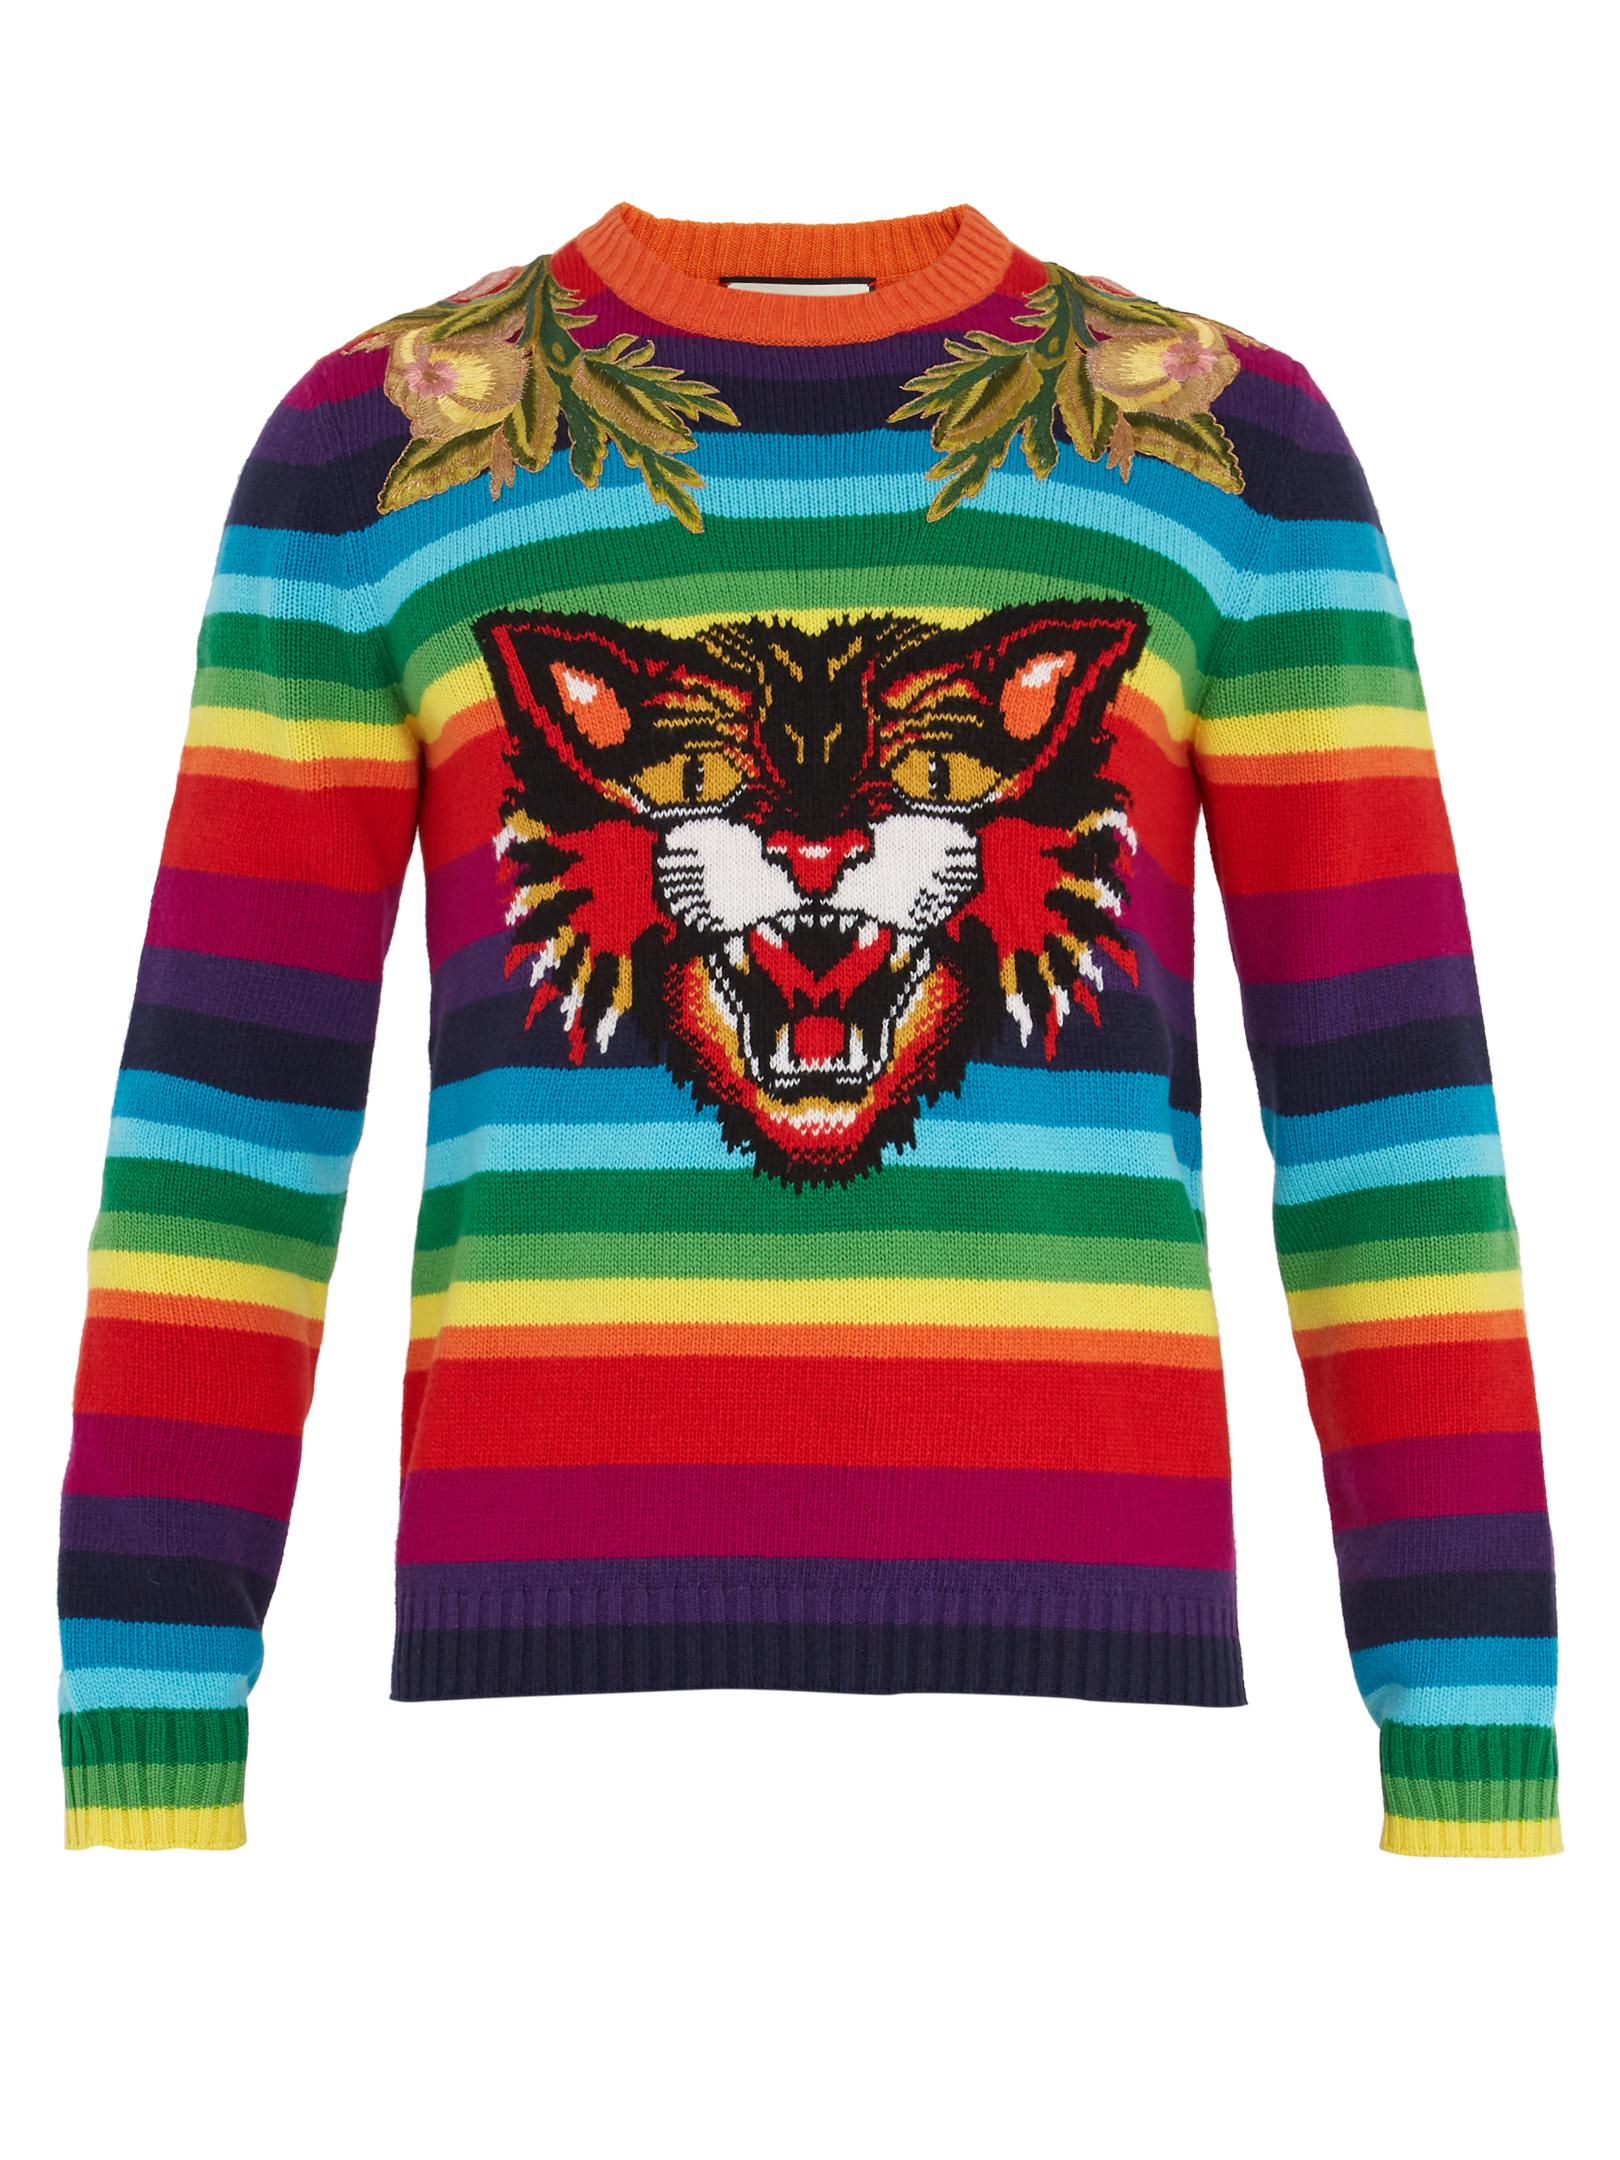 gucci angry cat sweatshirt